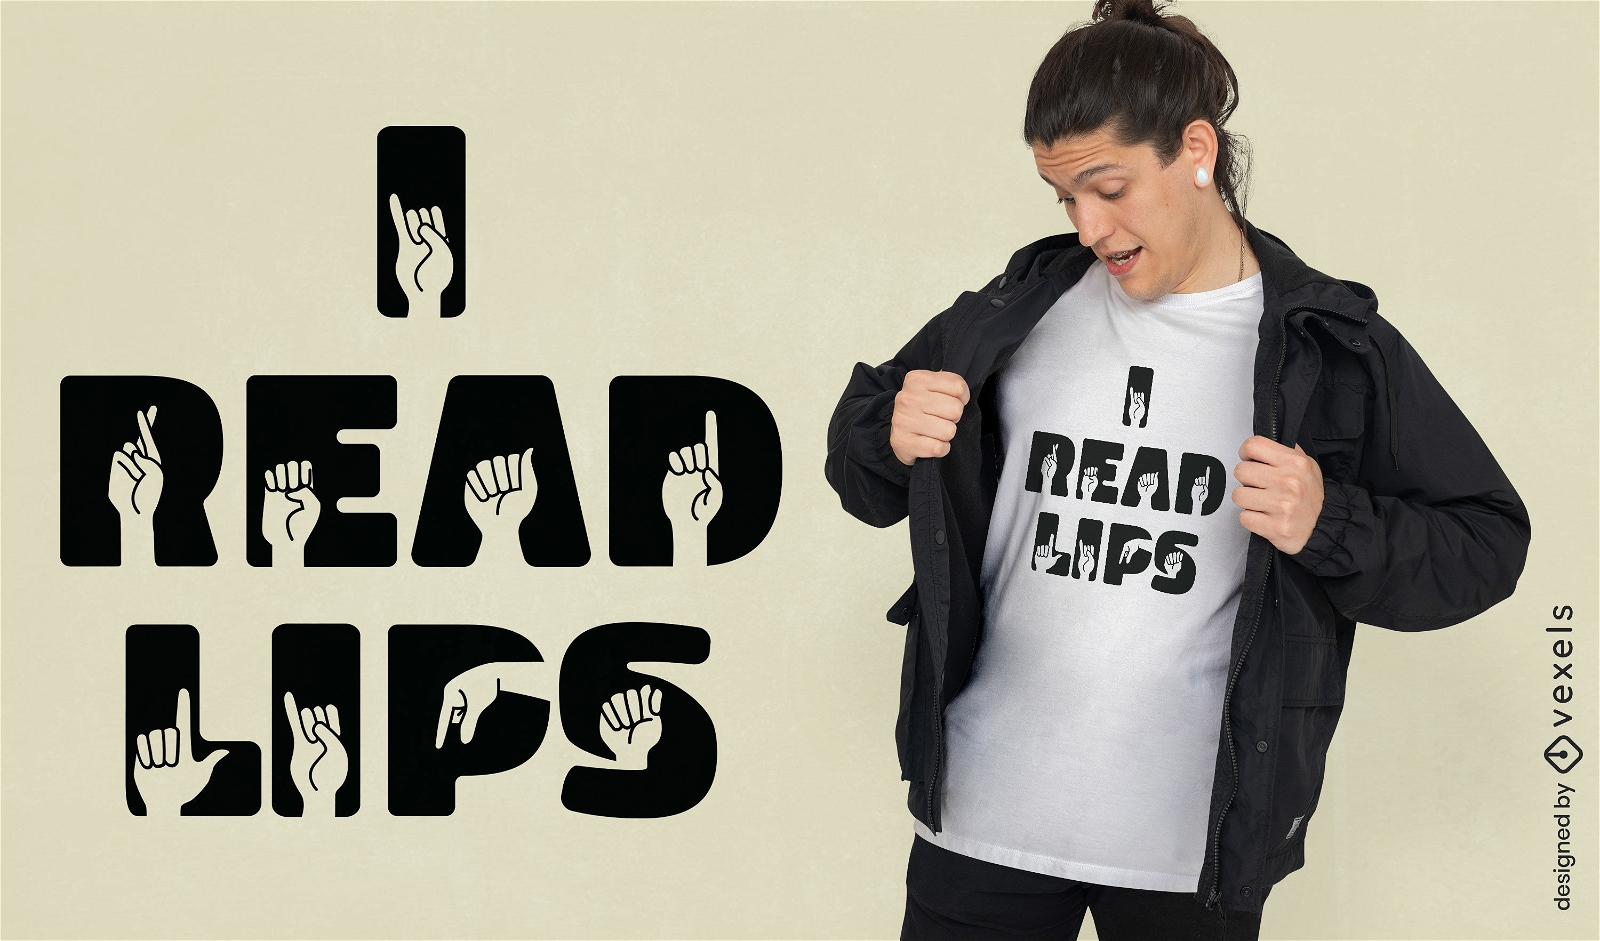 Sign language quote t-shirt design